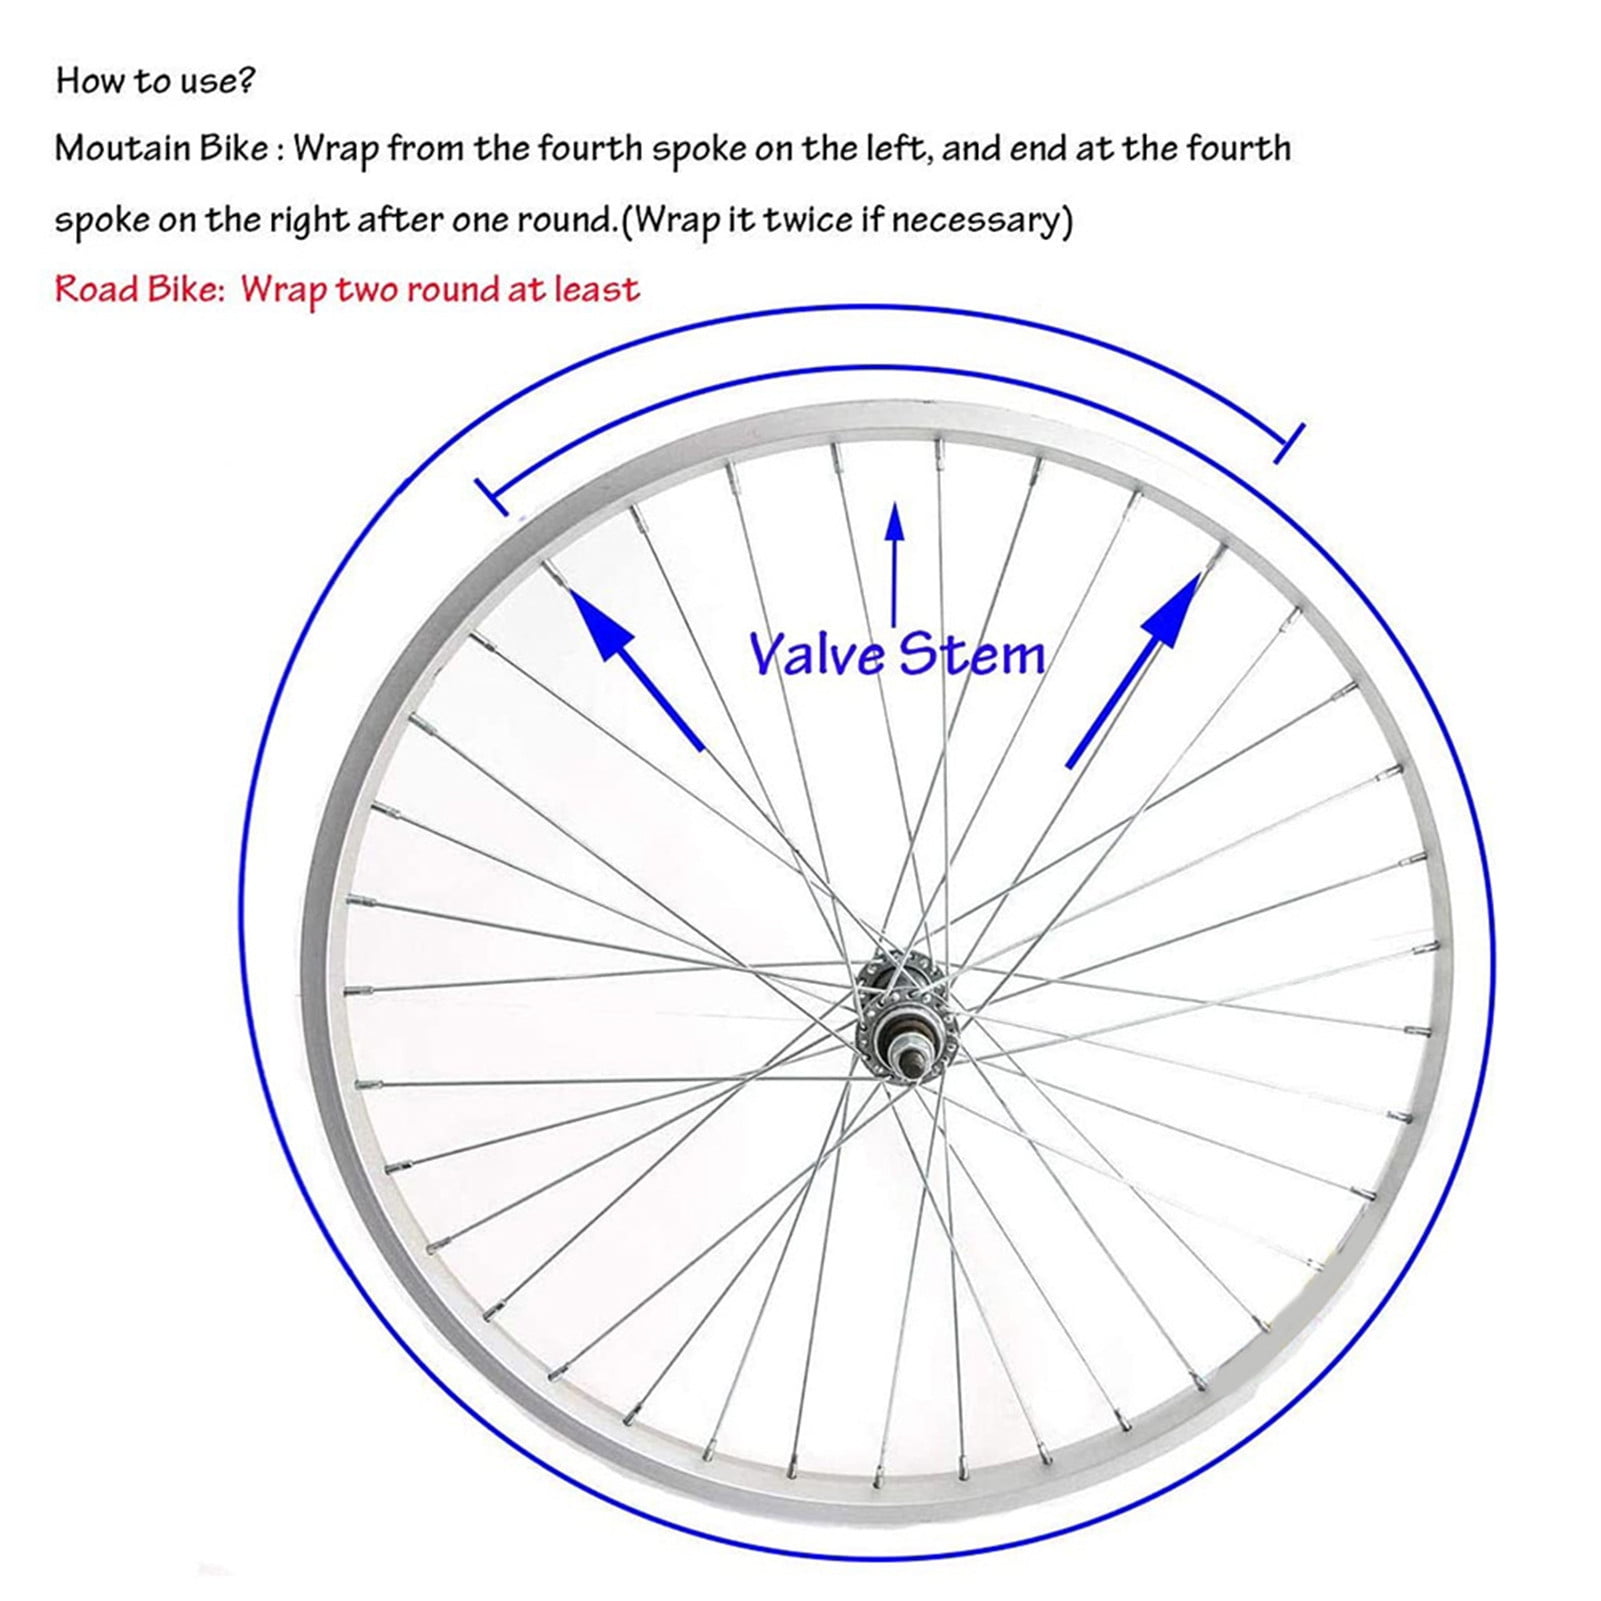 Details about   10m Bicycle Tubeless Rim Tapes Road Bike Rim Tape Strips Mountain Bike Wheel P2 